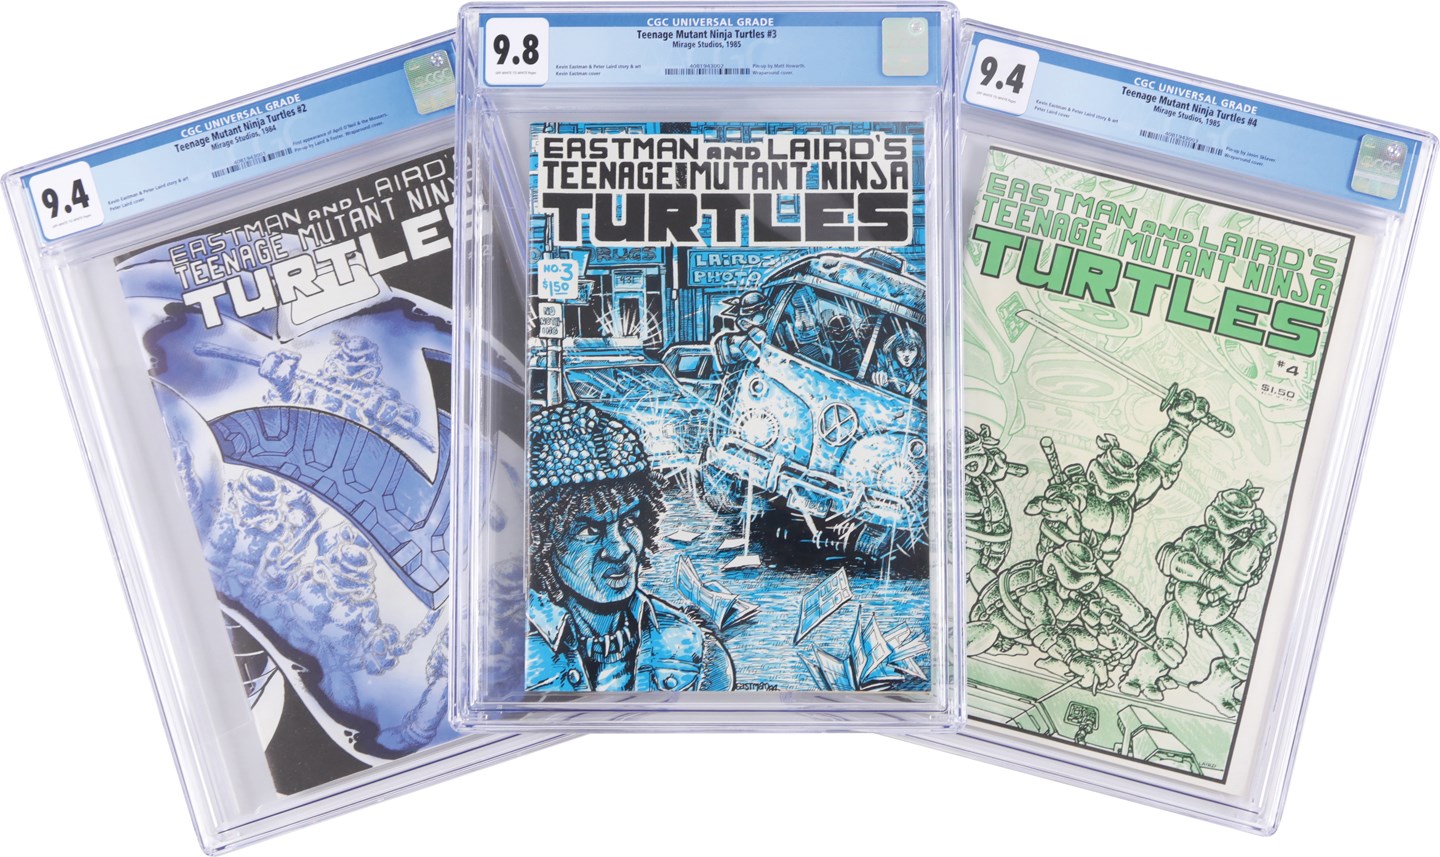 - 1984-86 Teenage Mutant Ninja Turtles #2-4 First Print (Mirage Studios) CGC High Grade Trio